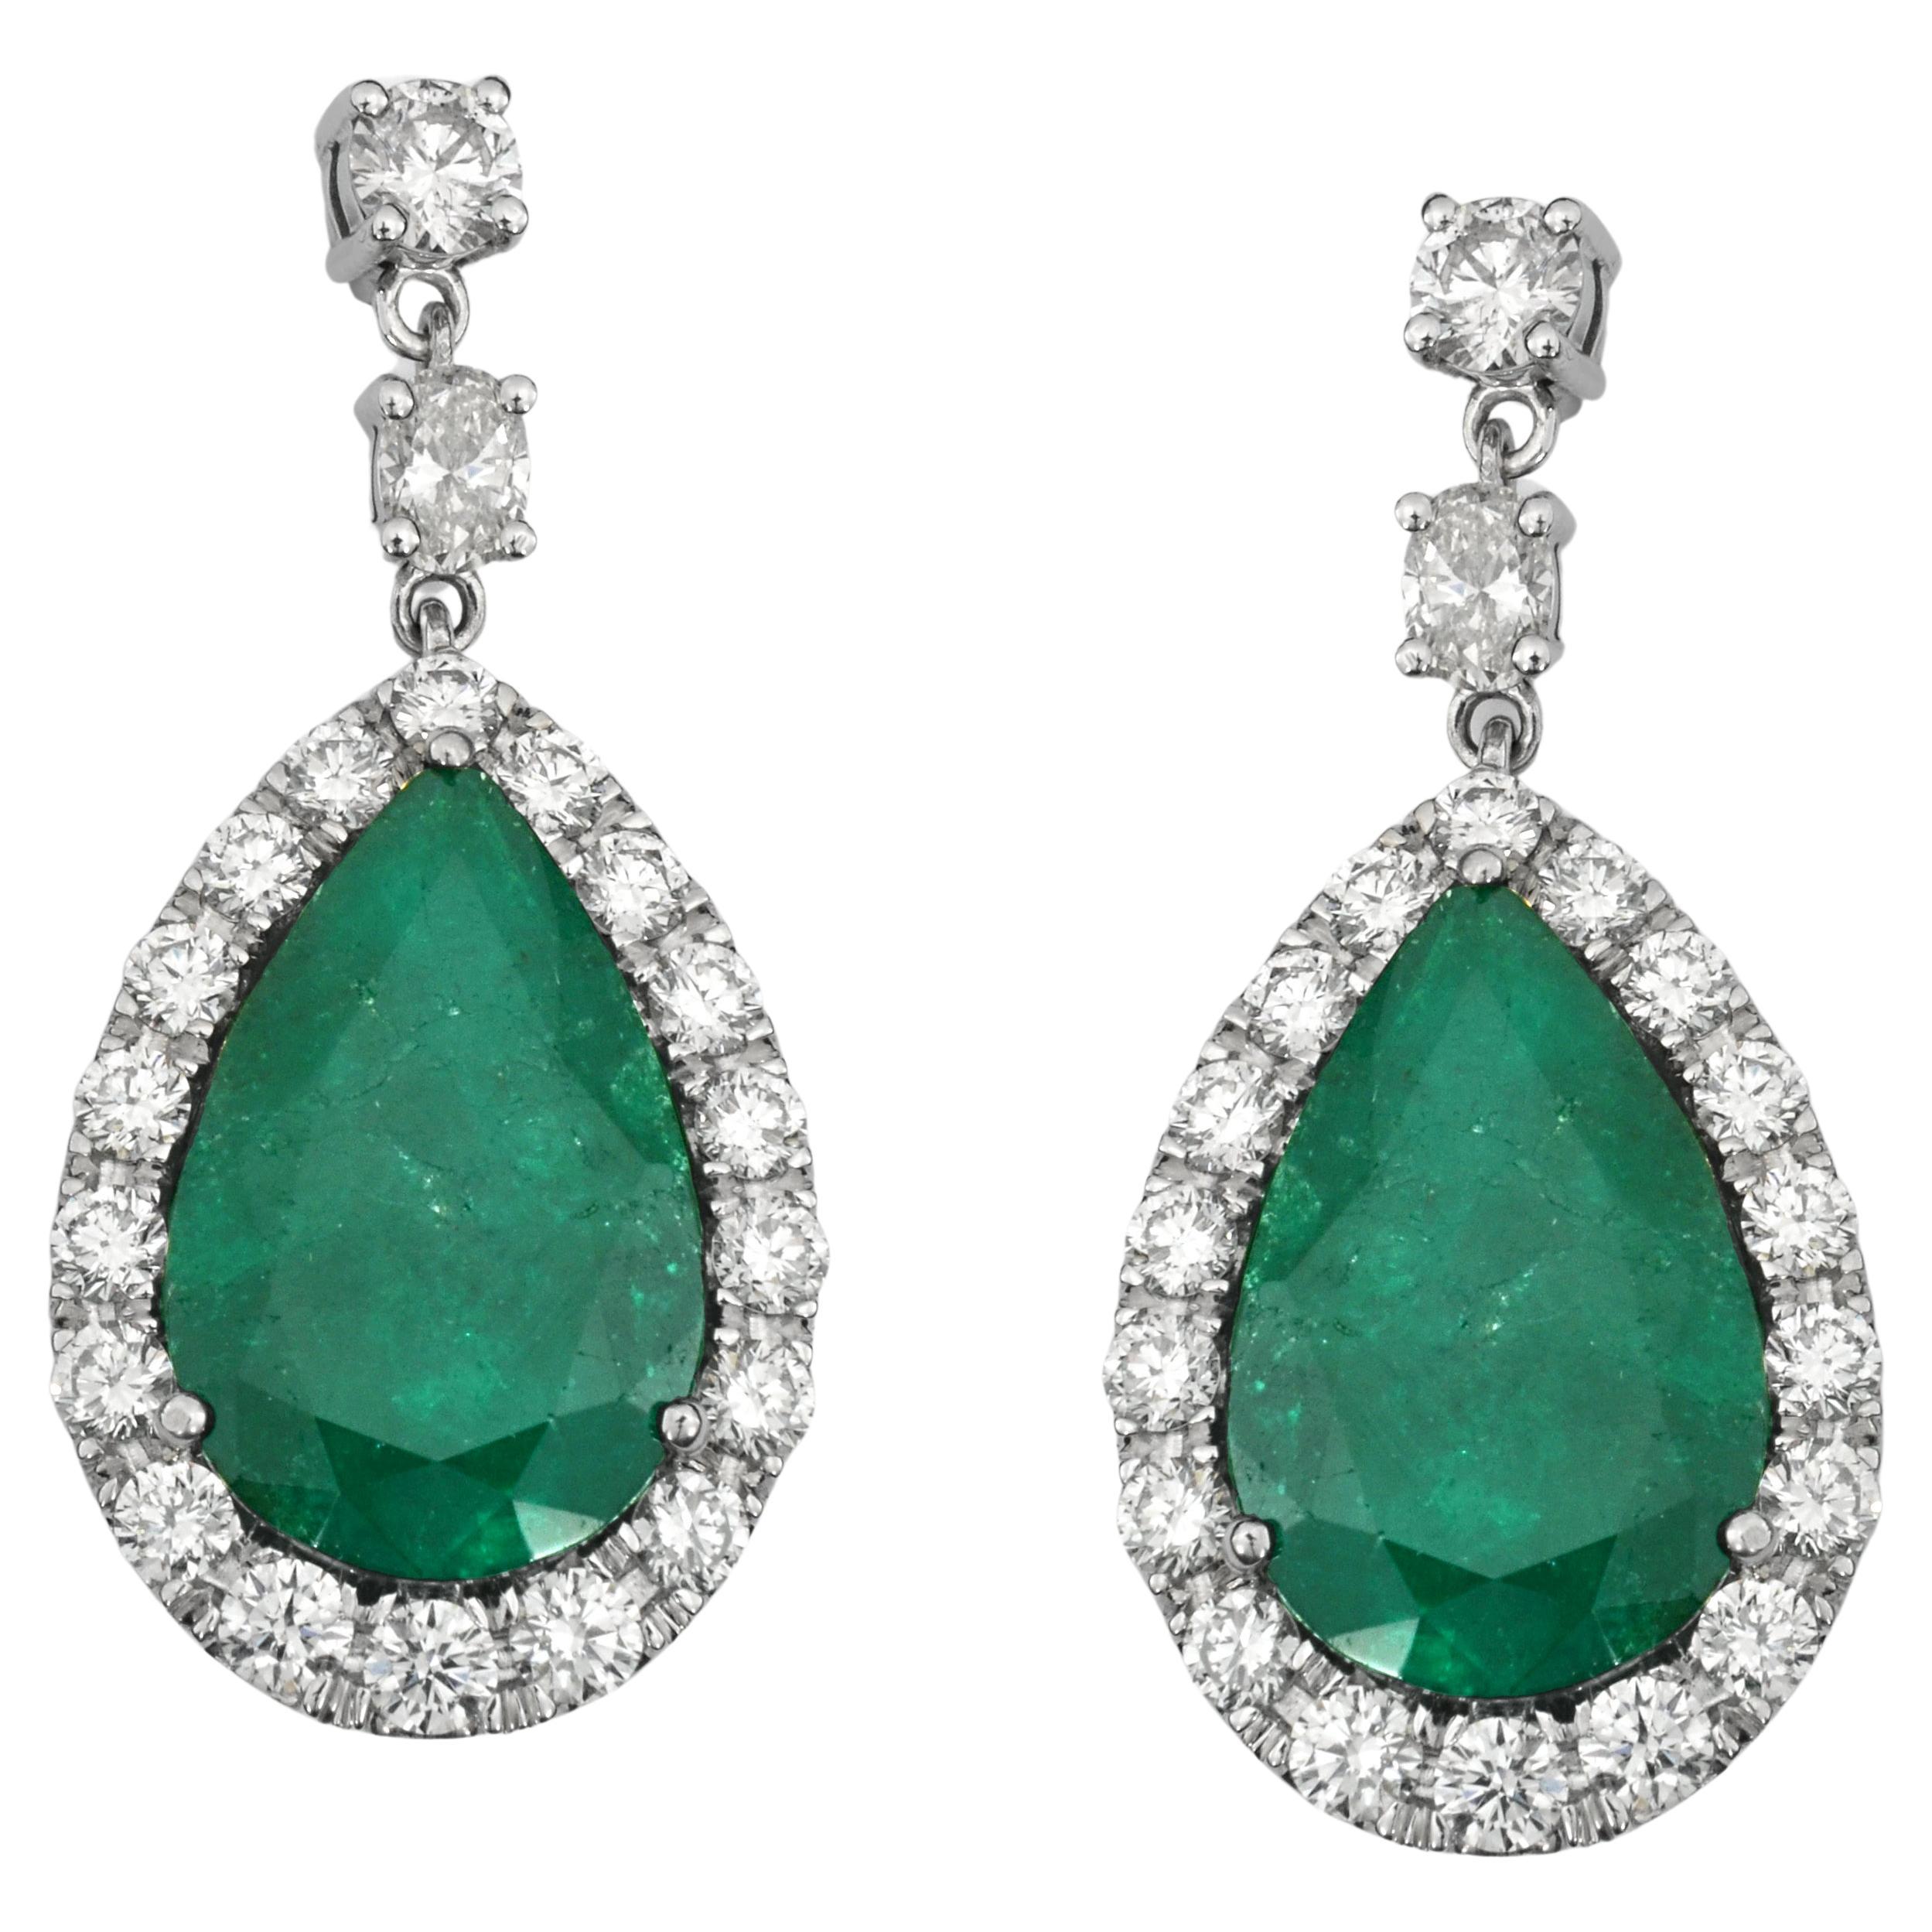 Cocktail-Ohrringe mit Diamant und grünem Smaragd